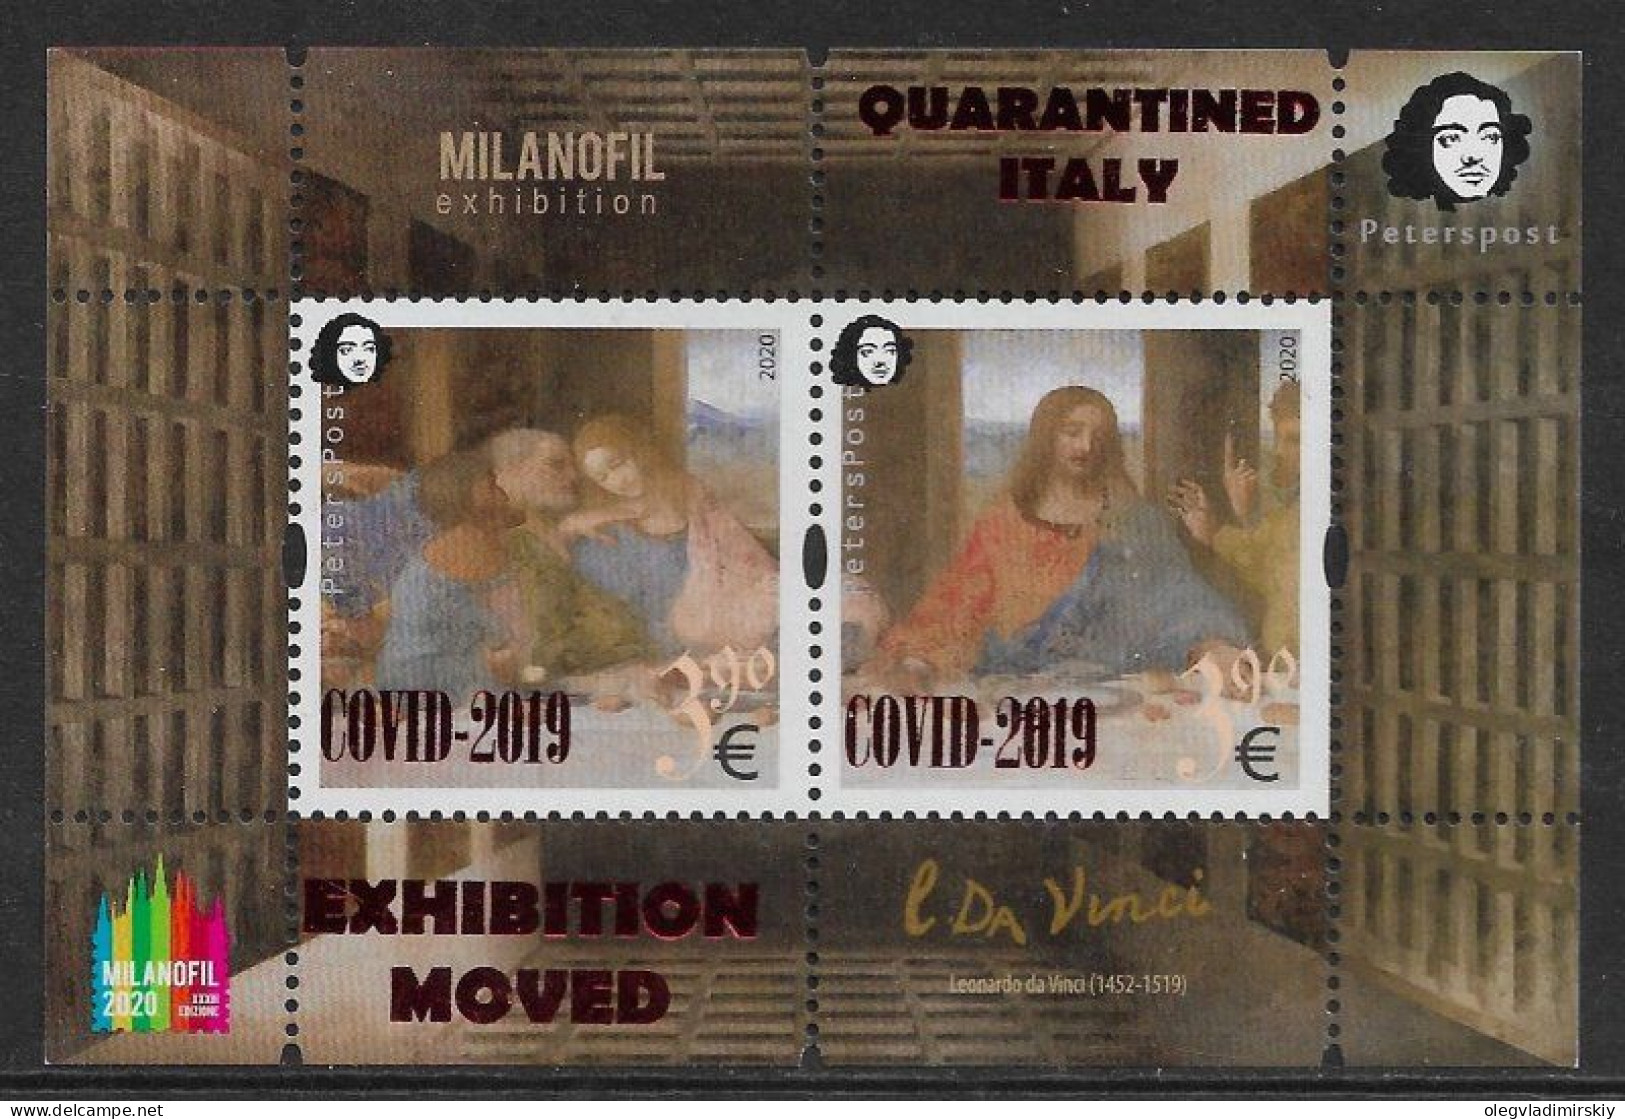 Finland 2020 Quarantined Italy COVID-2019 Leonardo Da Vinci MILANOFIL Exhibition Muved Peterspost Block Overprint MNH - Medicina